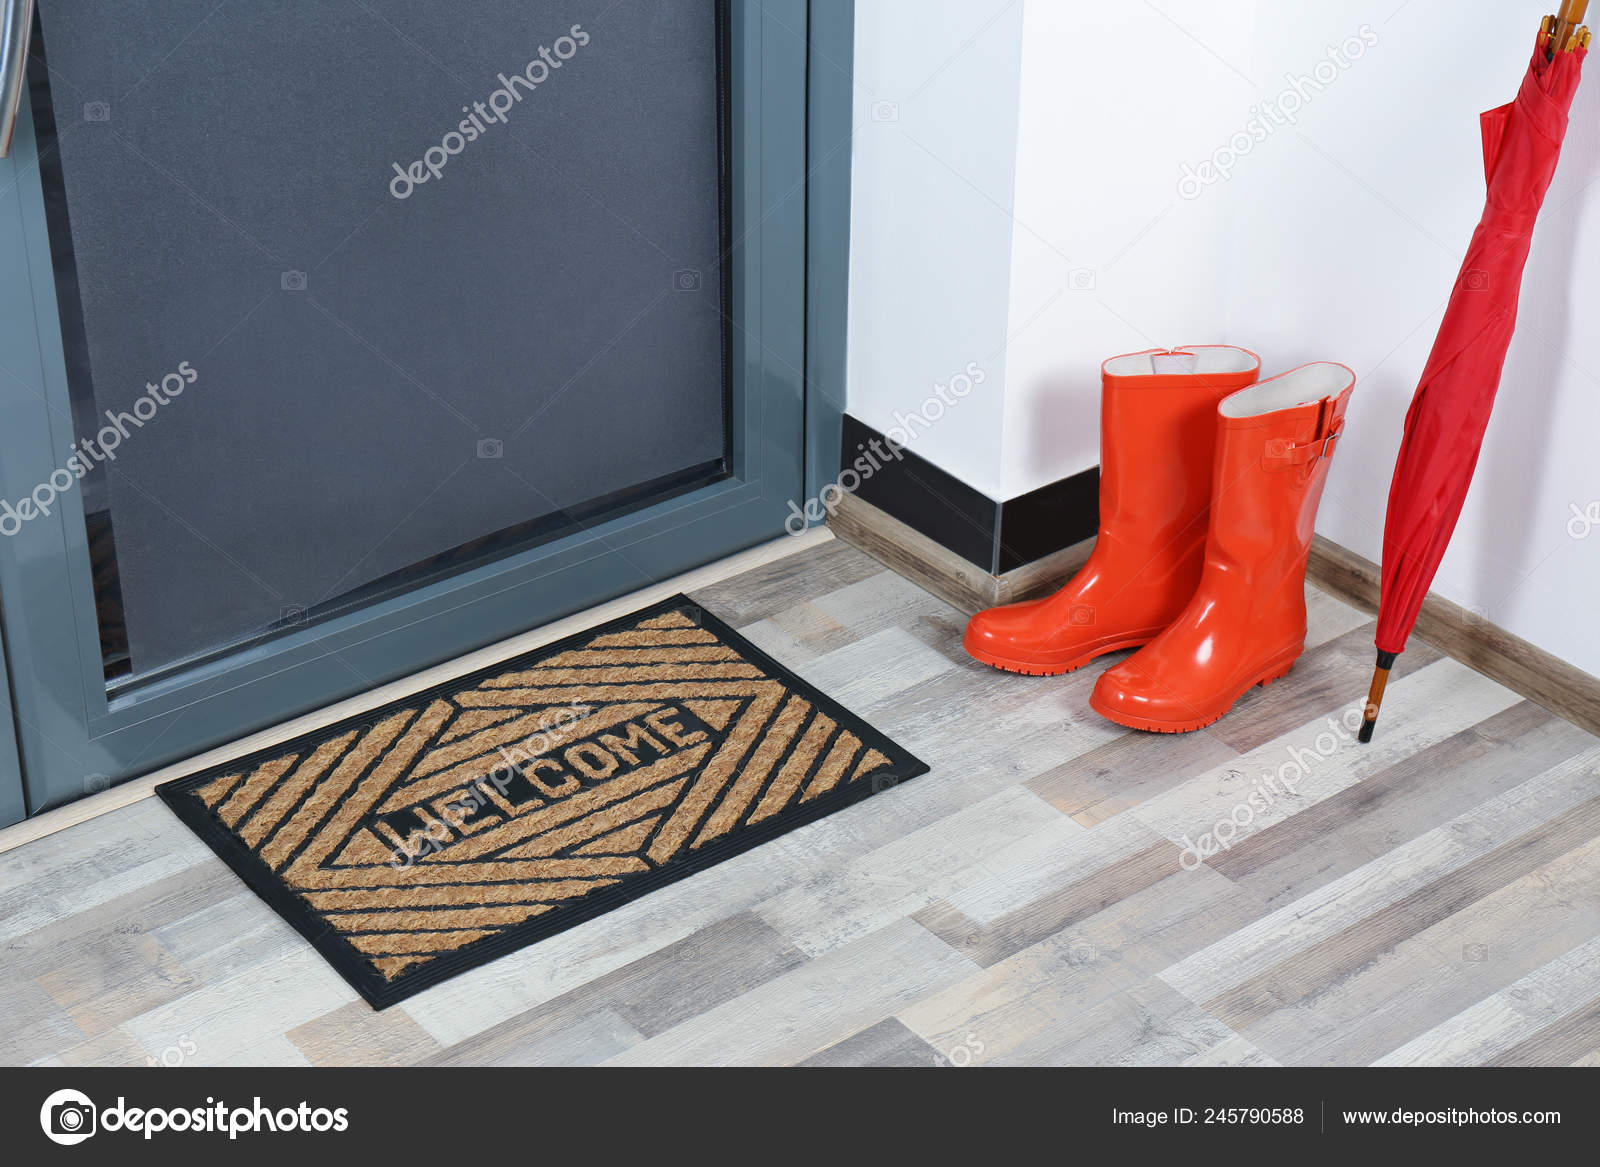 https://st4.depositphotos.com/16122460/24579/i/1600/depositphotos_245790588-stock-photo-rubber-boots-umbrella-mat-door.jpg